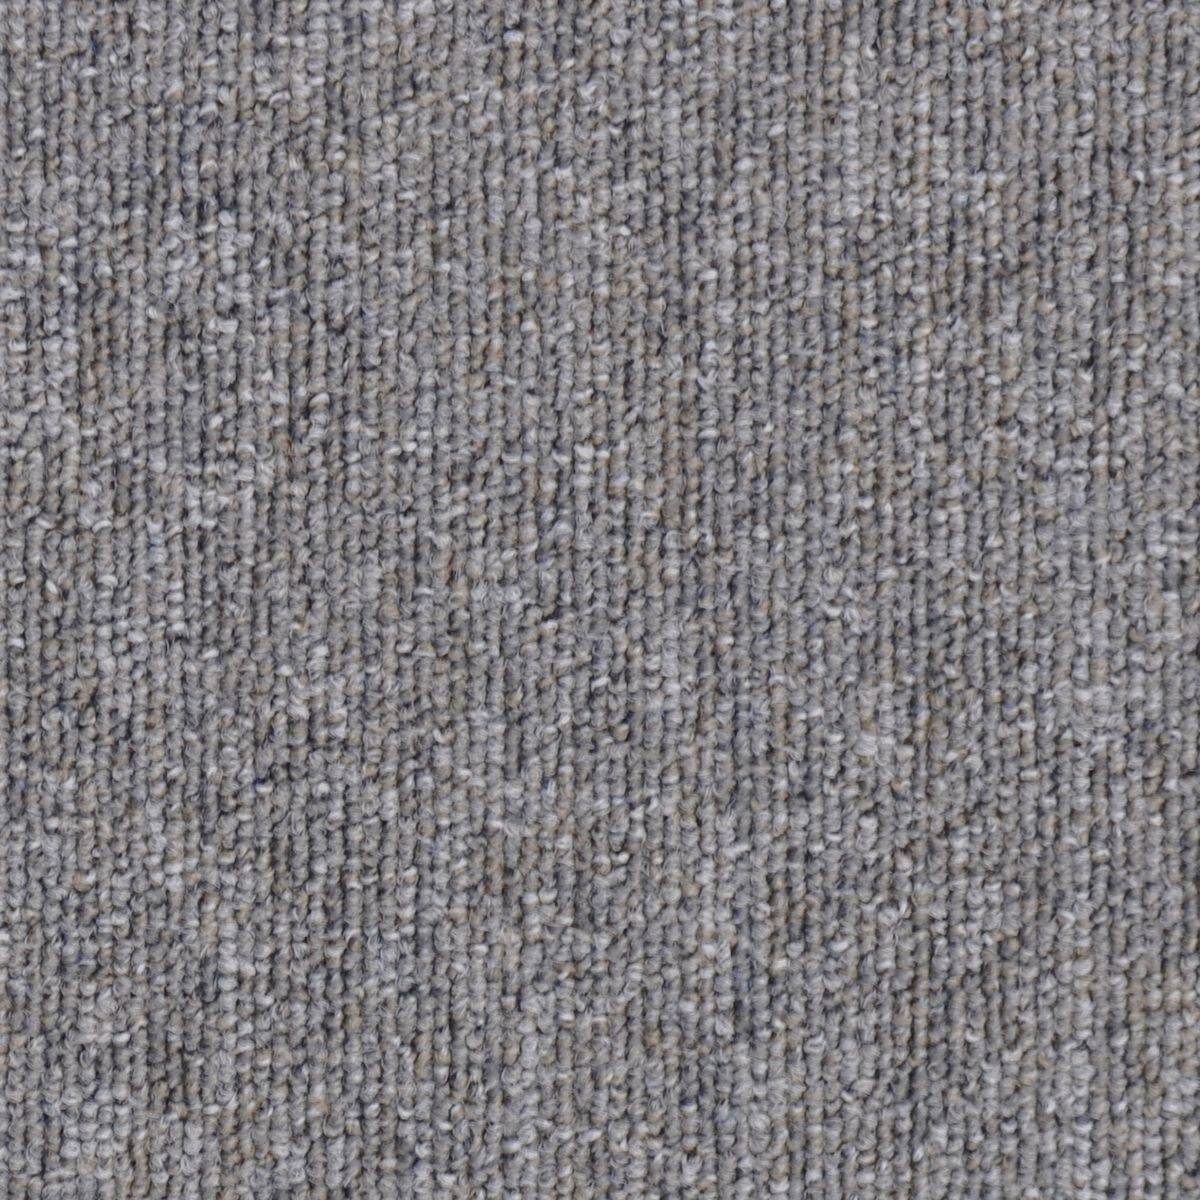 Flooring Hut Peerless Carpet Tile Grey